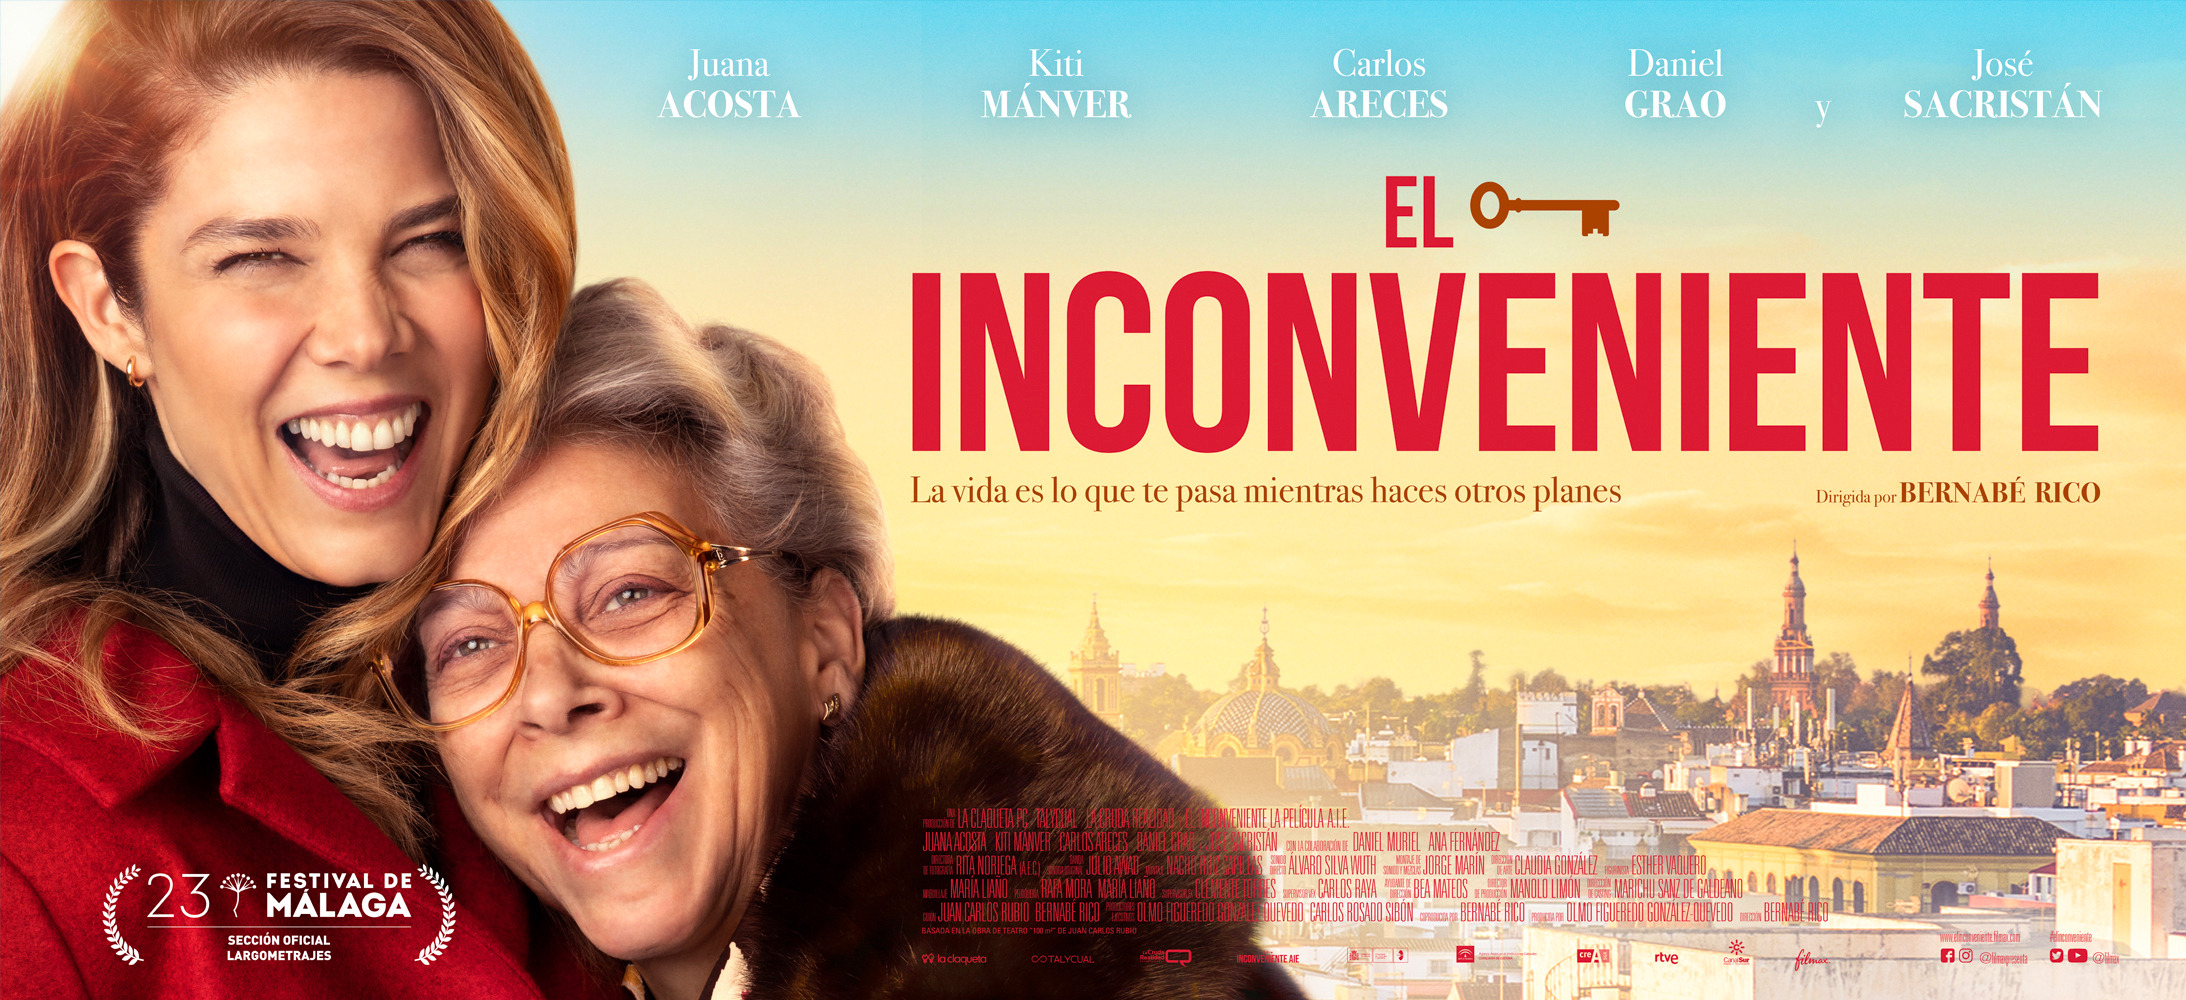 Mega Sized Movie Poster Image for El inconveniente (#4 of 4)